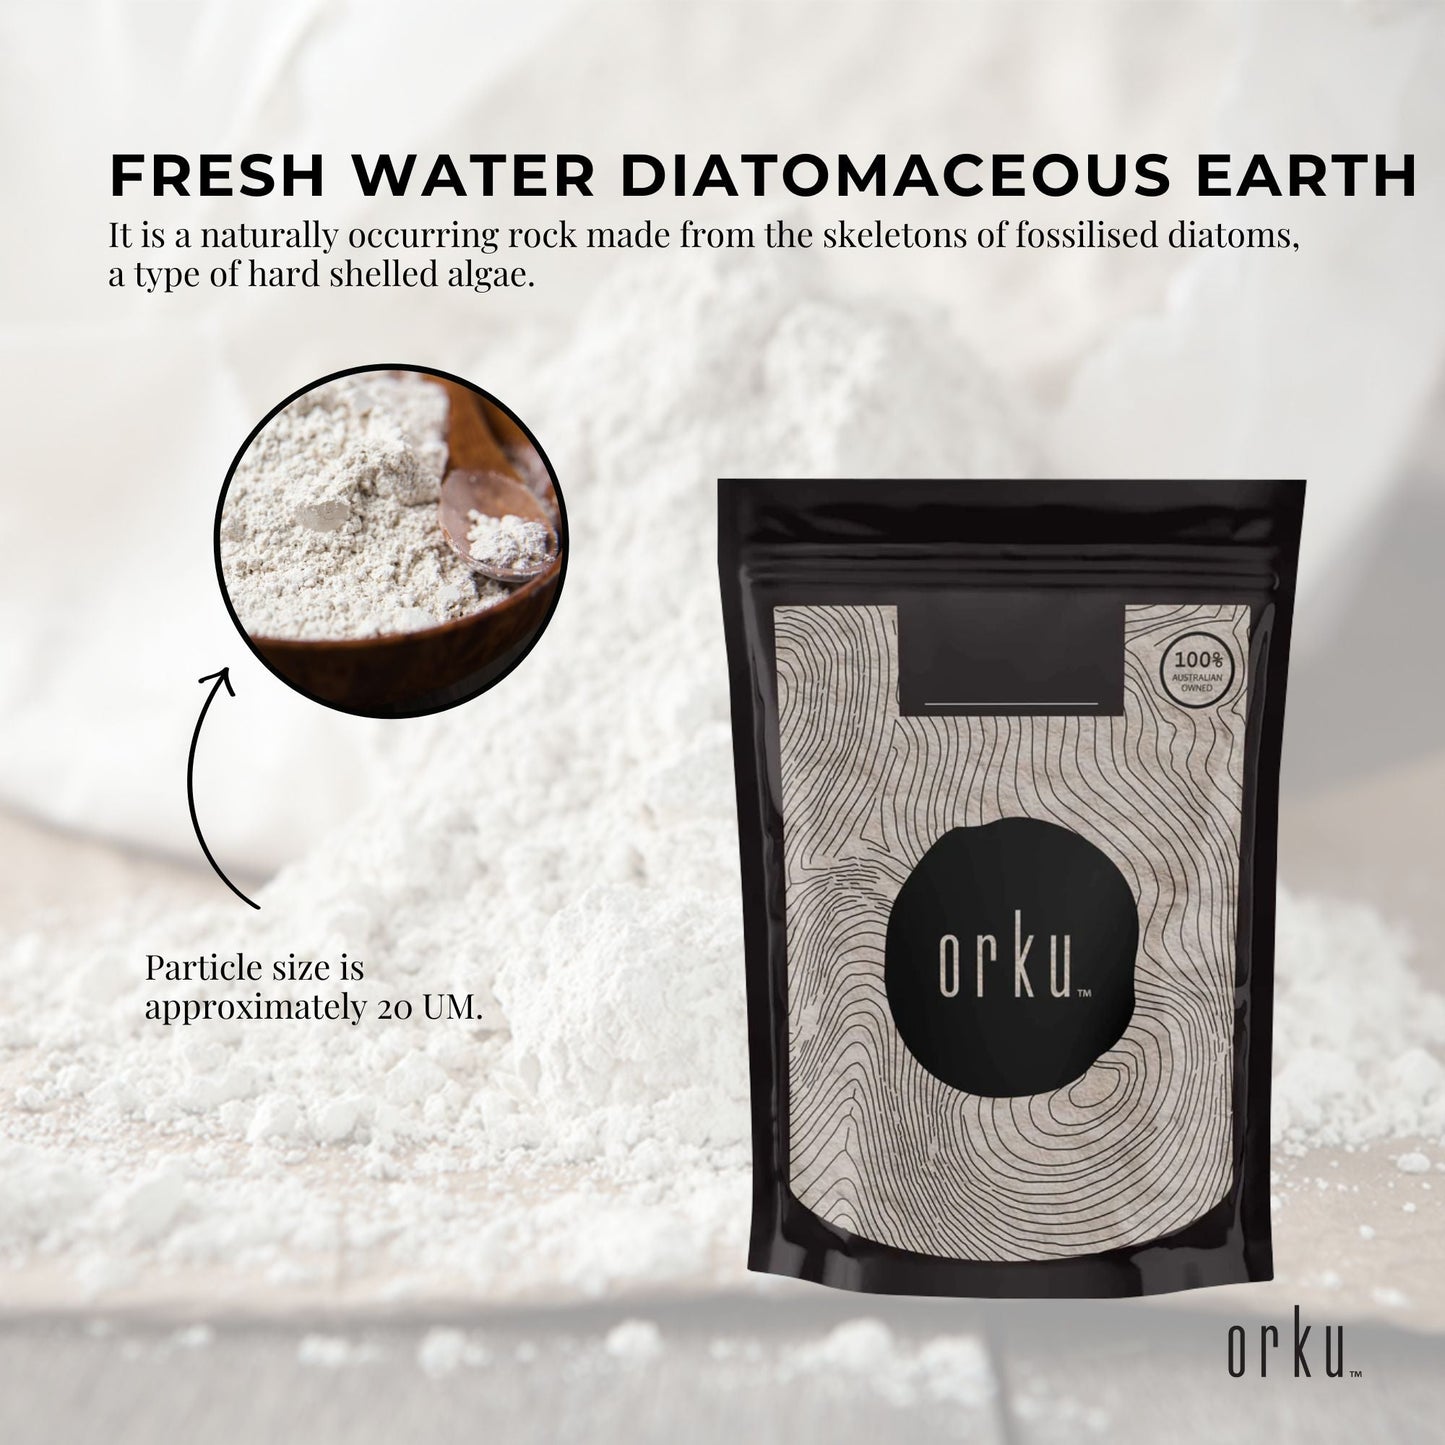 2Kg Organic Fine Diatomaceous Earth - Food Grade Fossil Shell Flour Powder